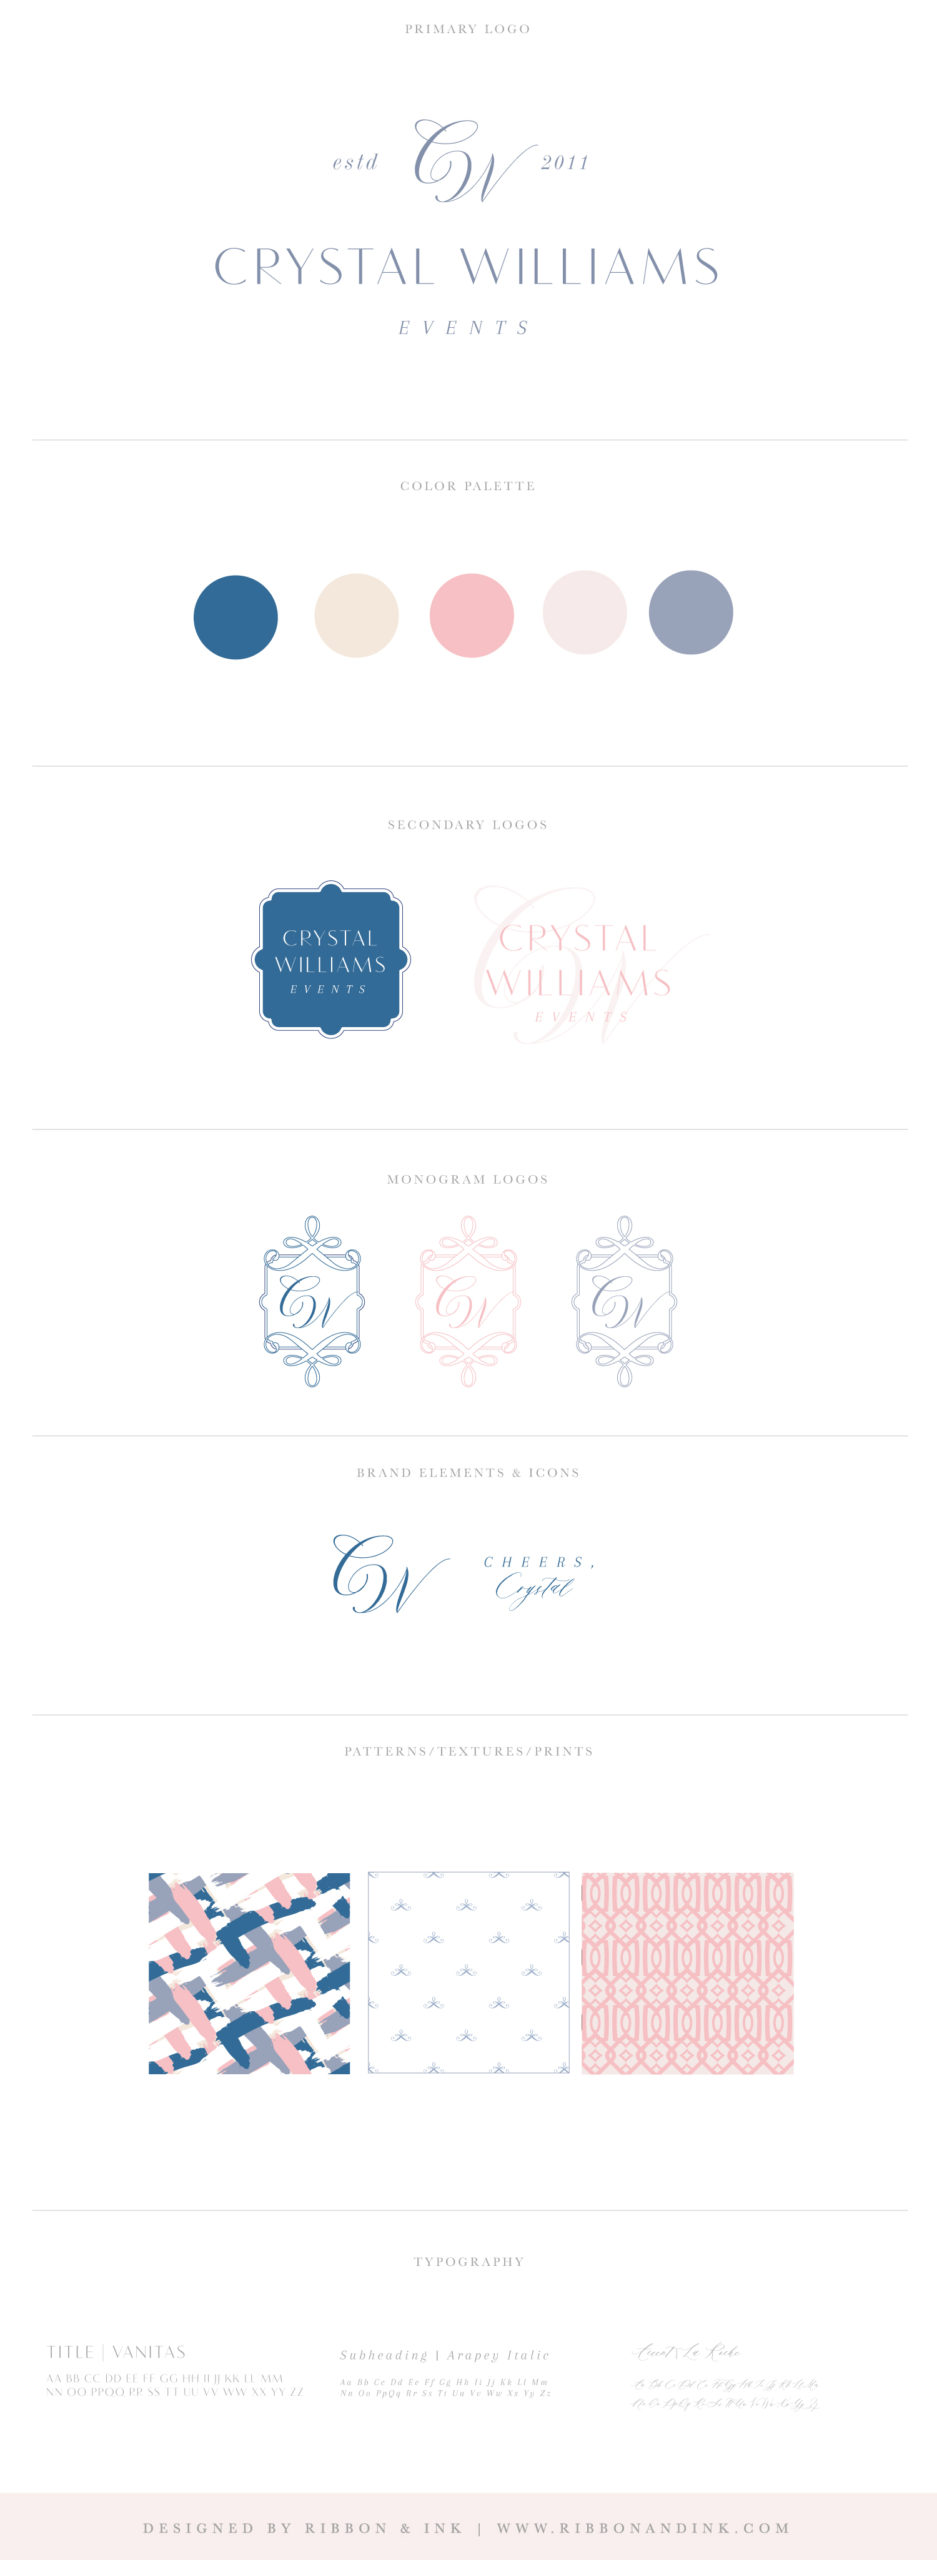 logo designer / branding for creatives and wedding businesses professionals / brand board / brand identity 